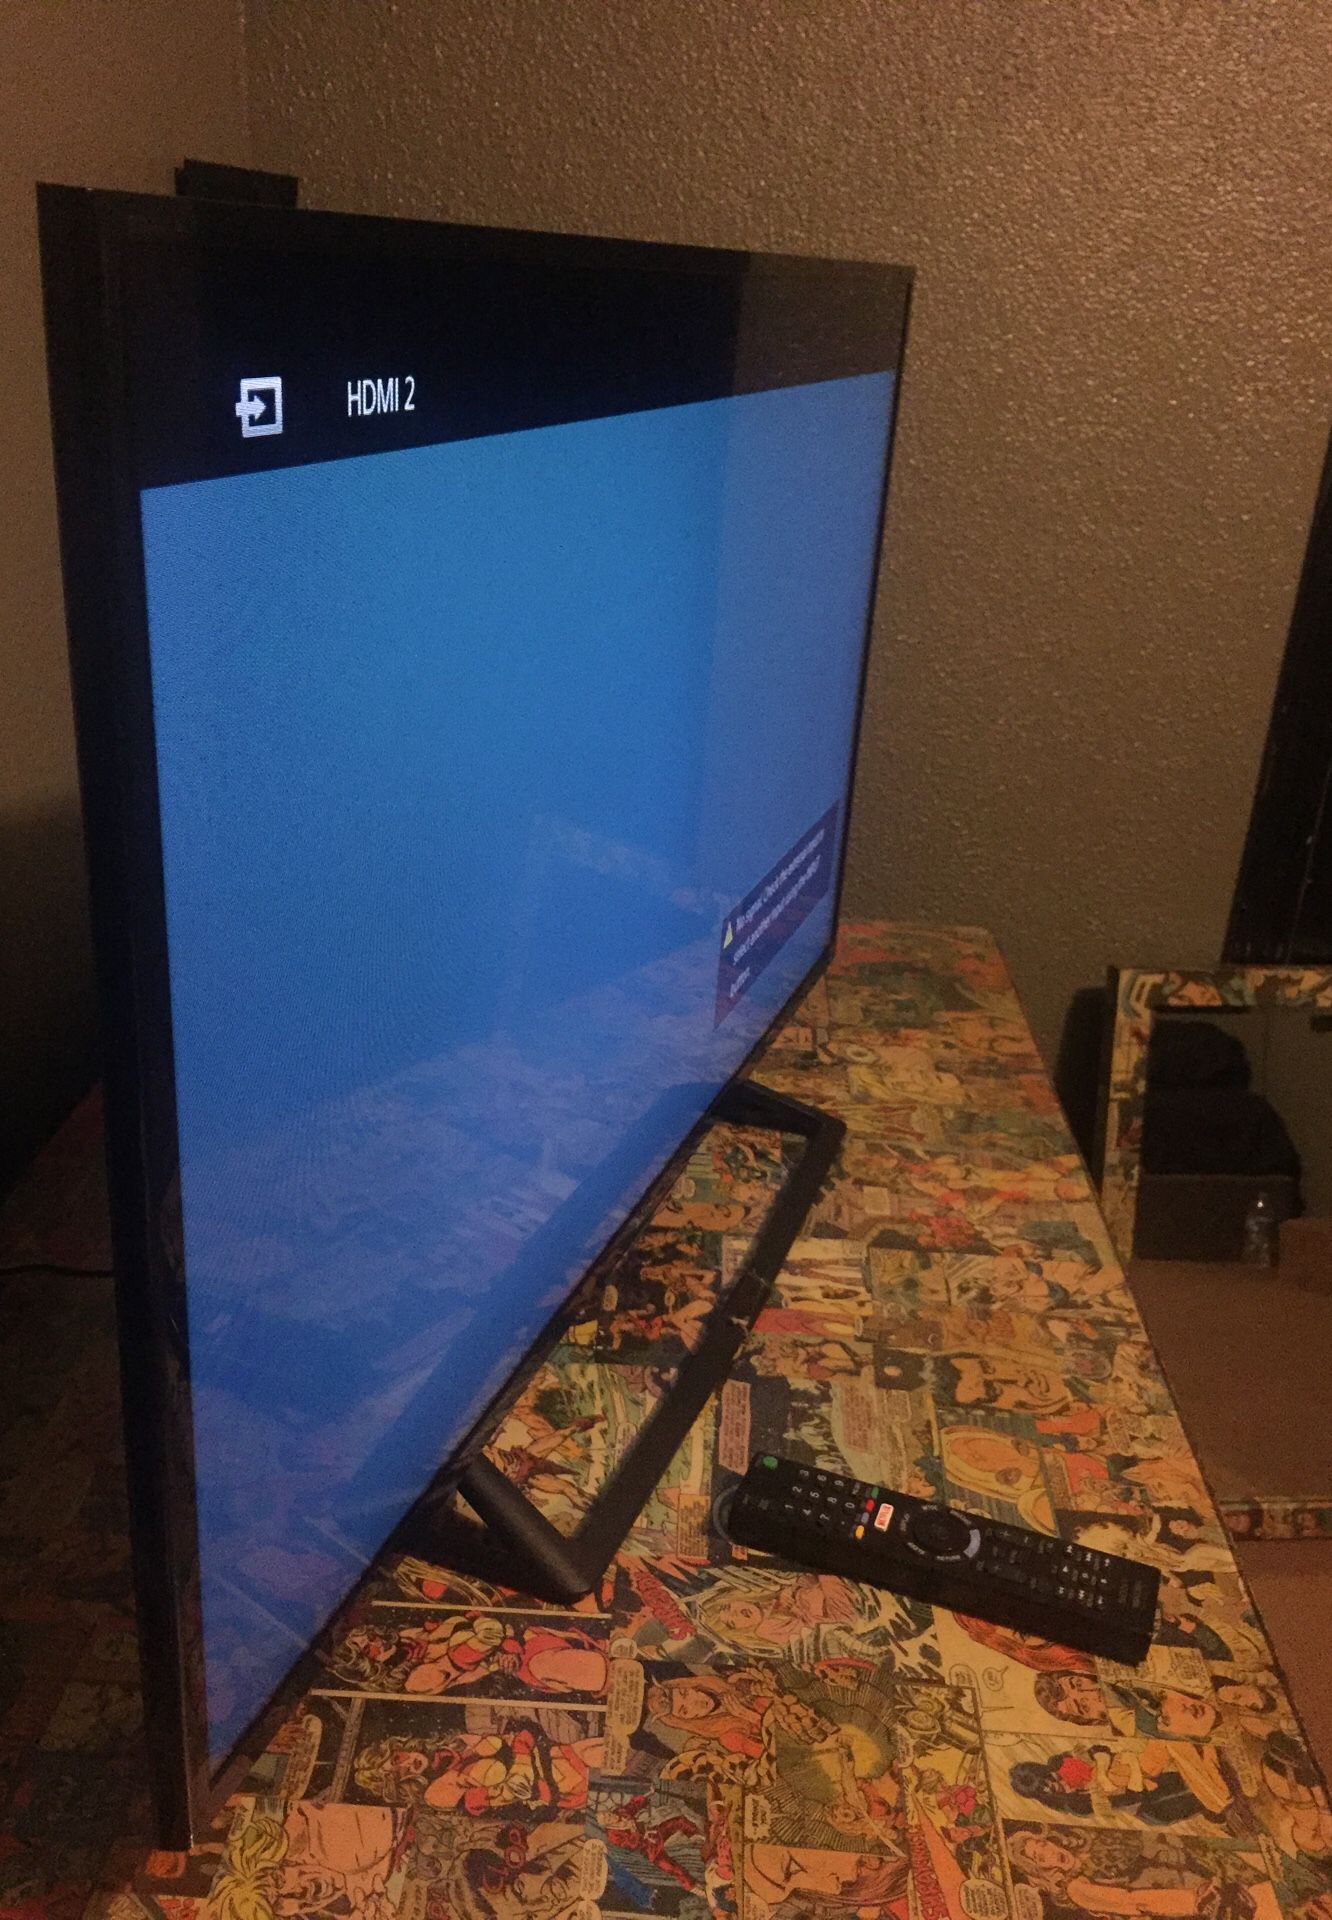 Sony 48 inch (Bravia) tv with original remote model#KDL-40R510C